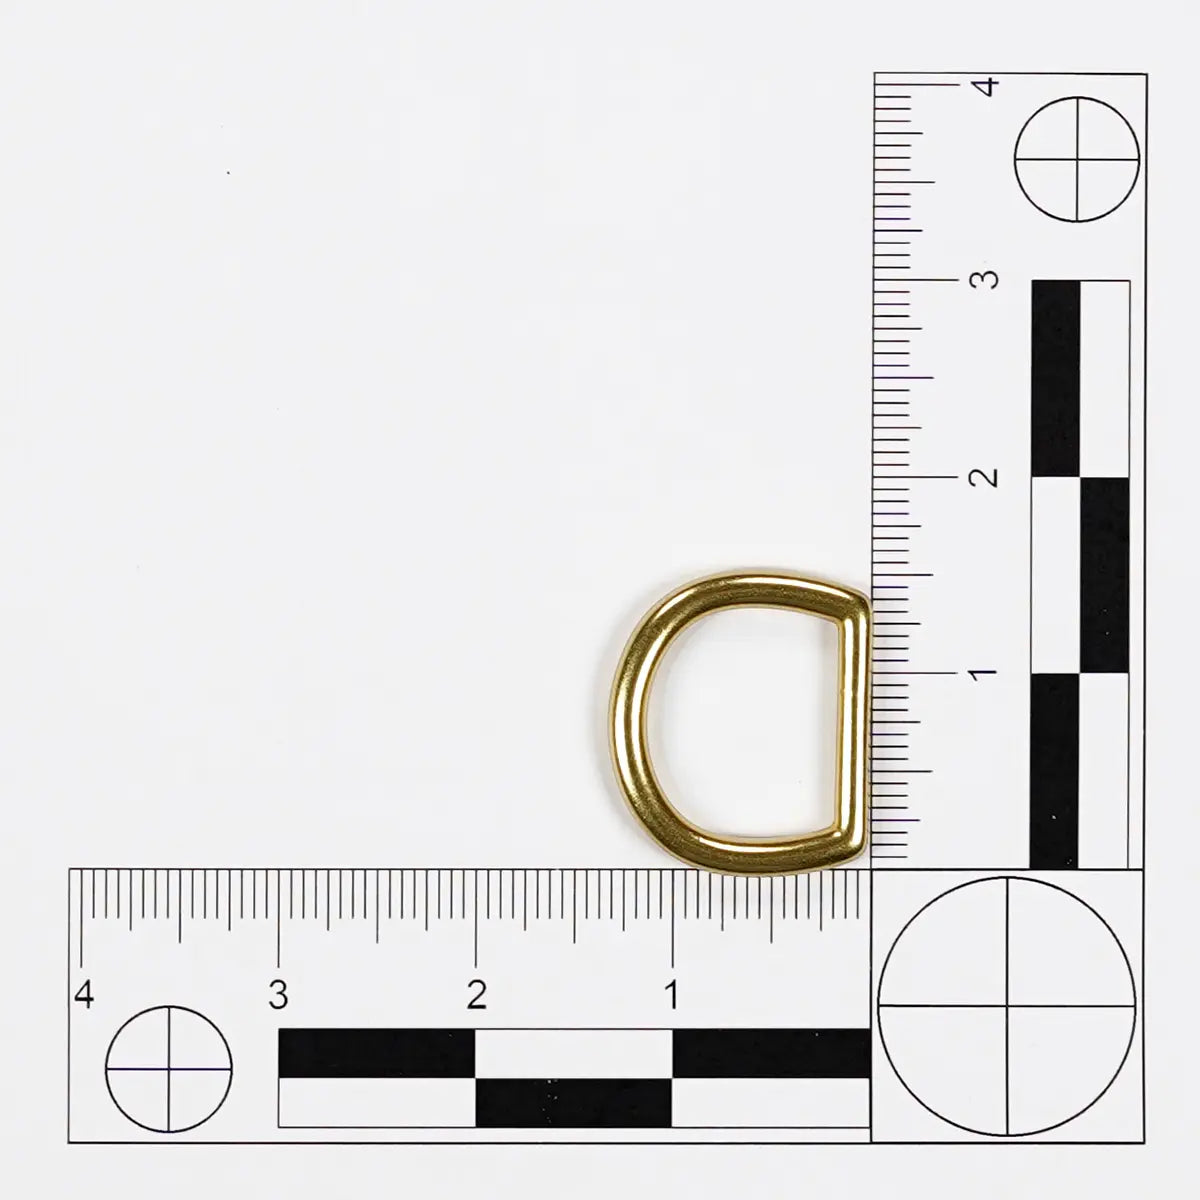 1" Solid Brass Modern D-Ring